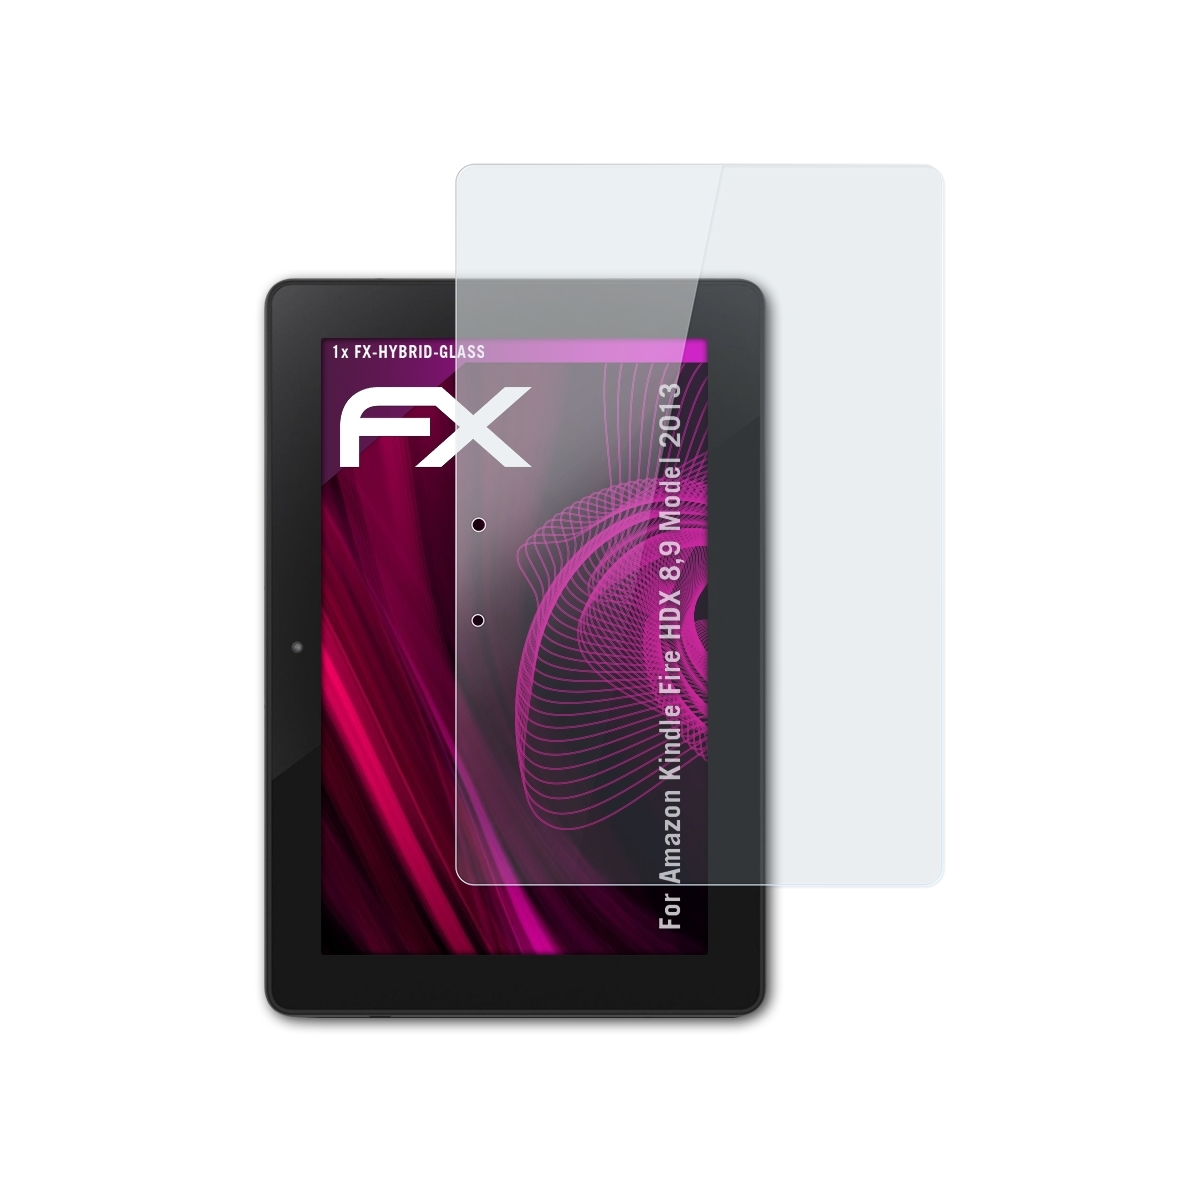 ATFOLIX FX-Hybrid-Glass Kindle 8,9 Amazon Fire 2013)) HDX Schutzglas(für (Model